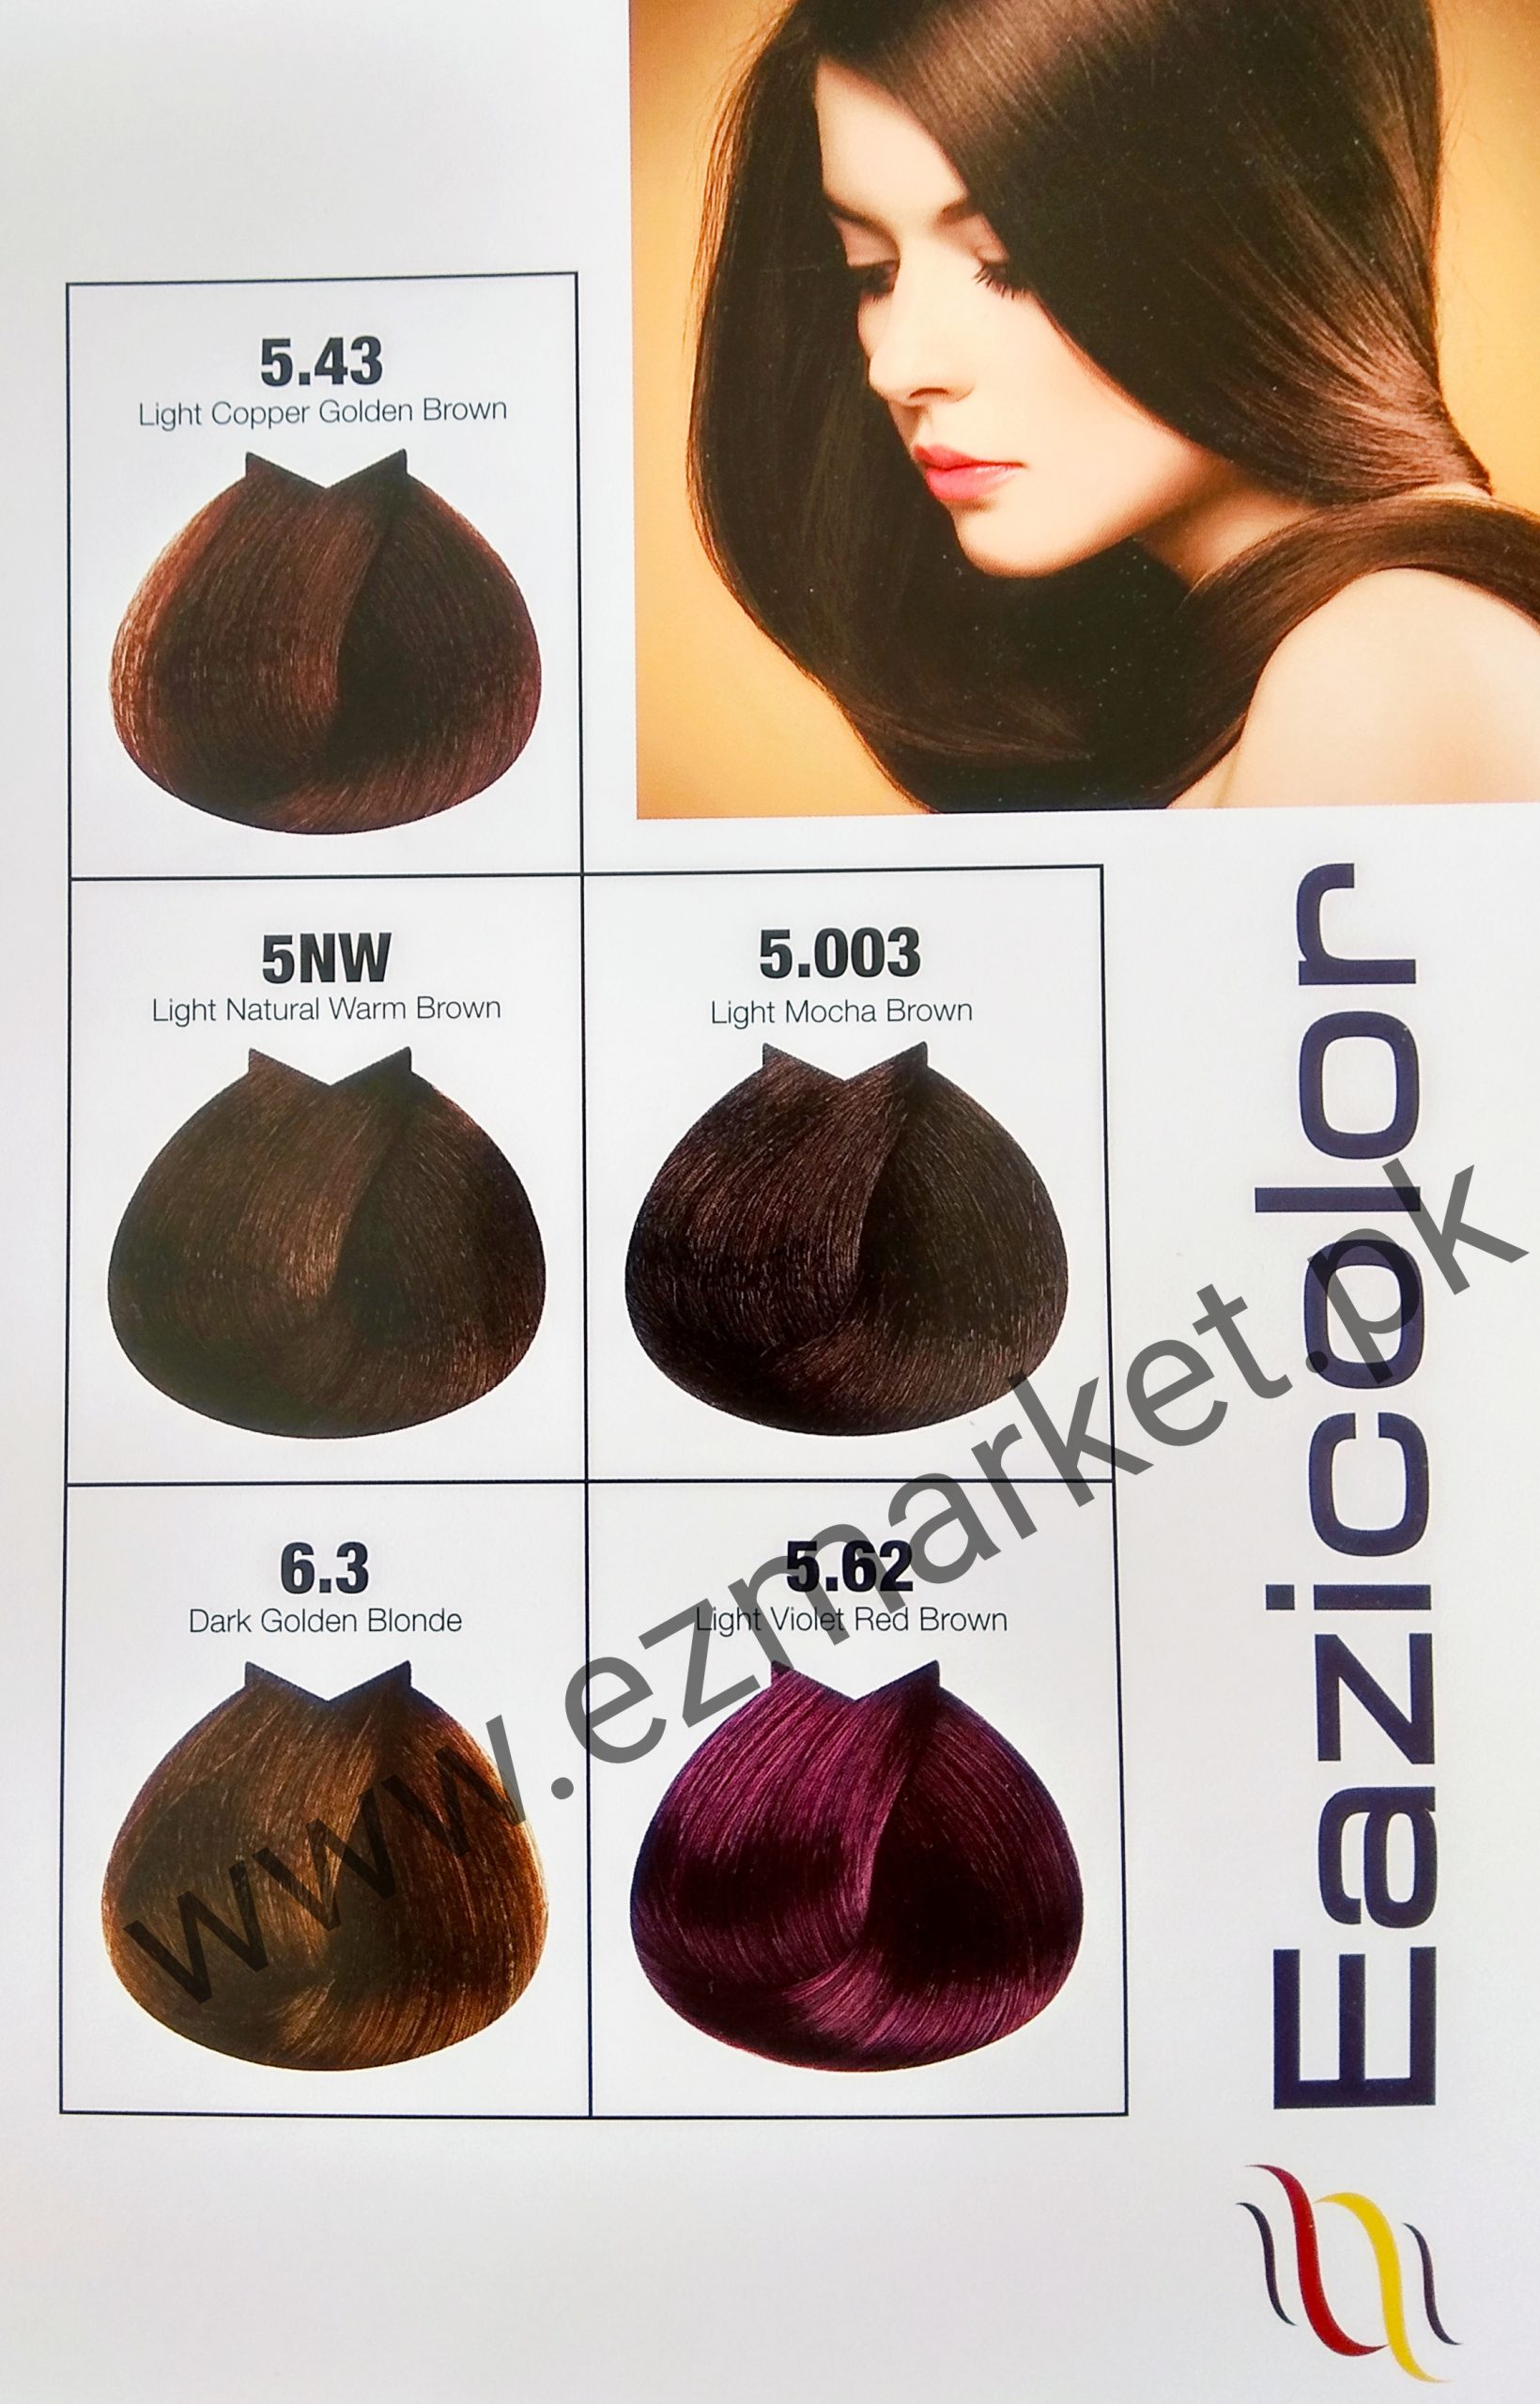 Eazicolor Premium Hair Color Kit For Women Light Violet Red Brown  |  ezMarket